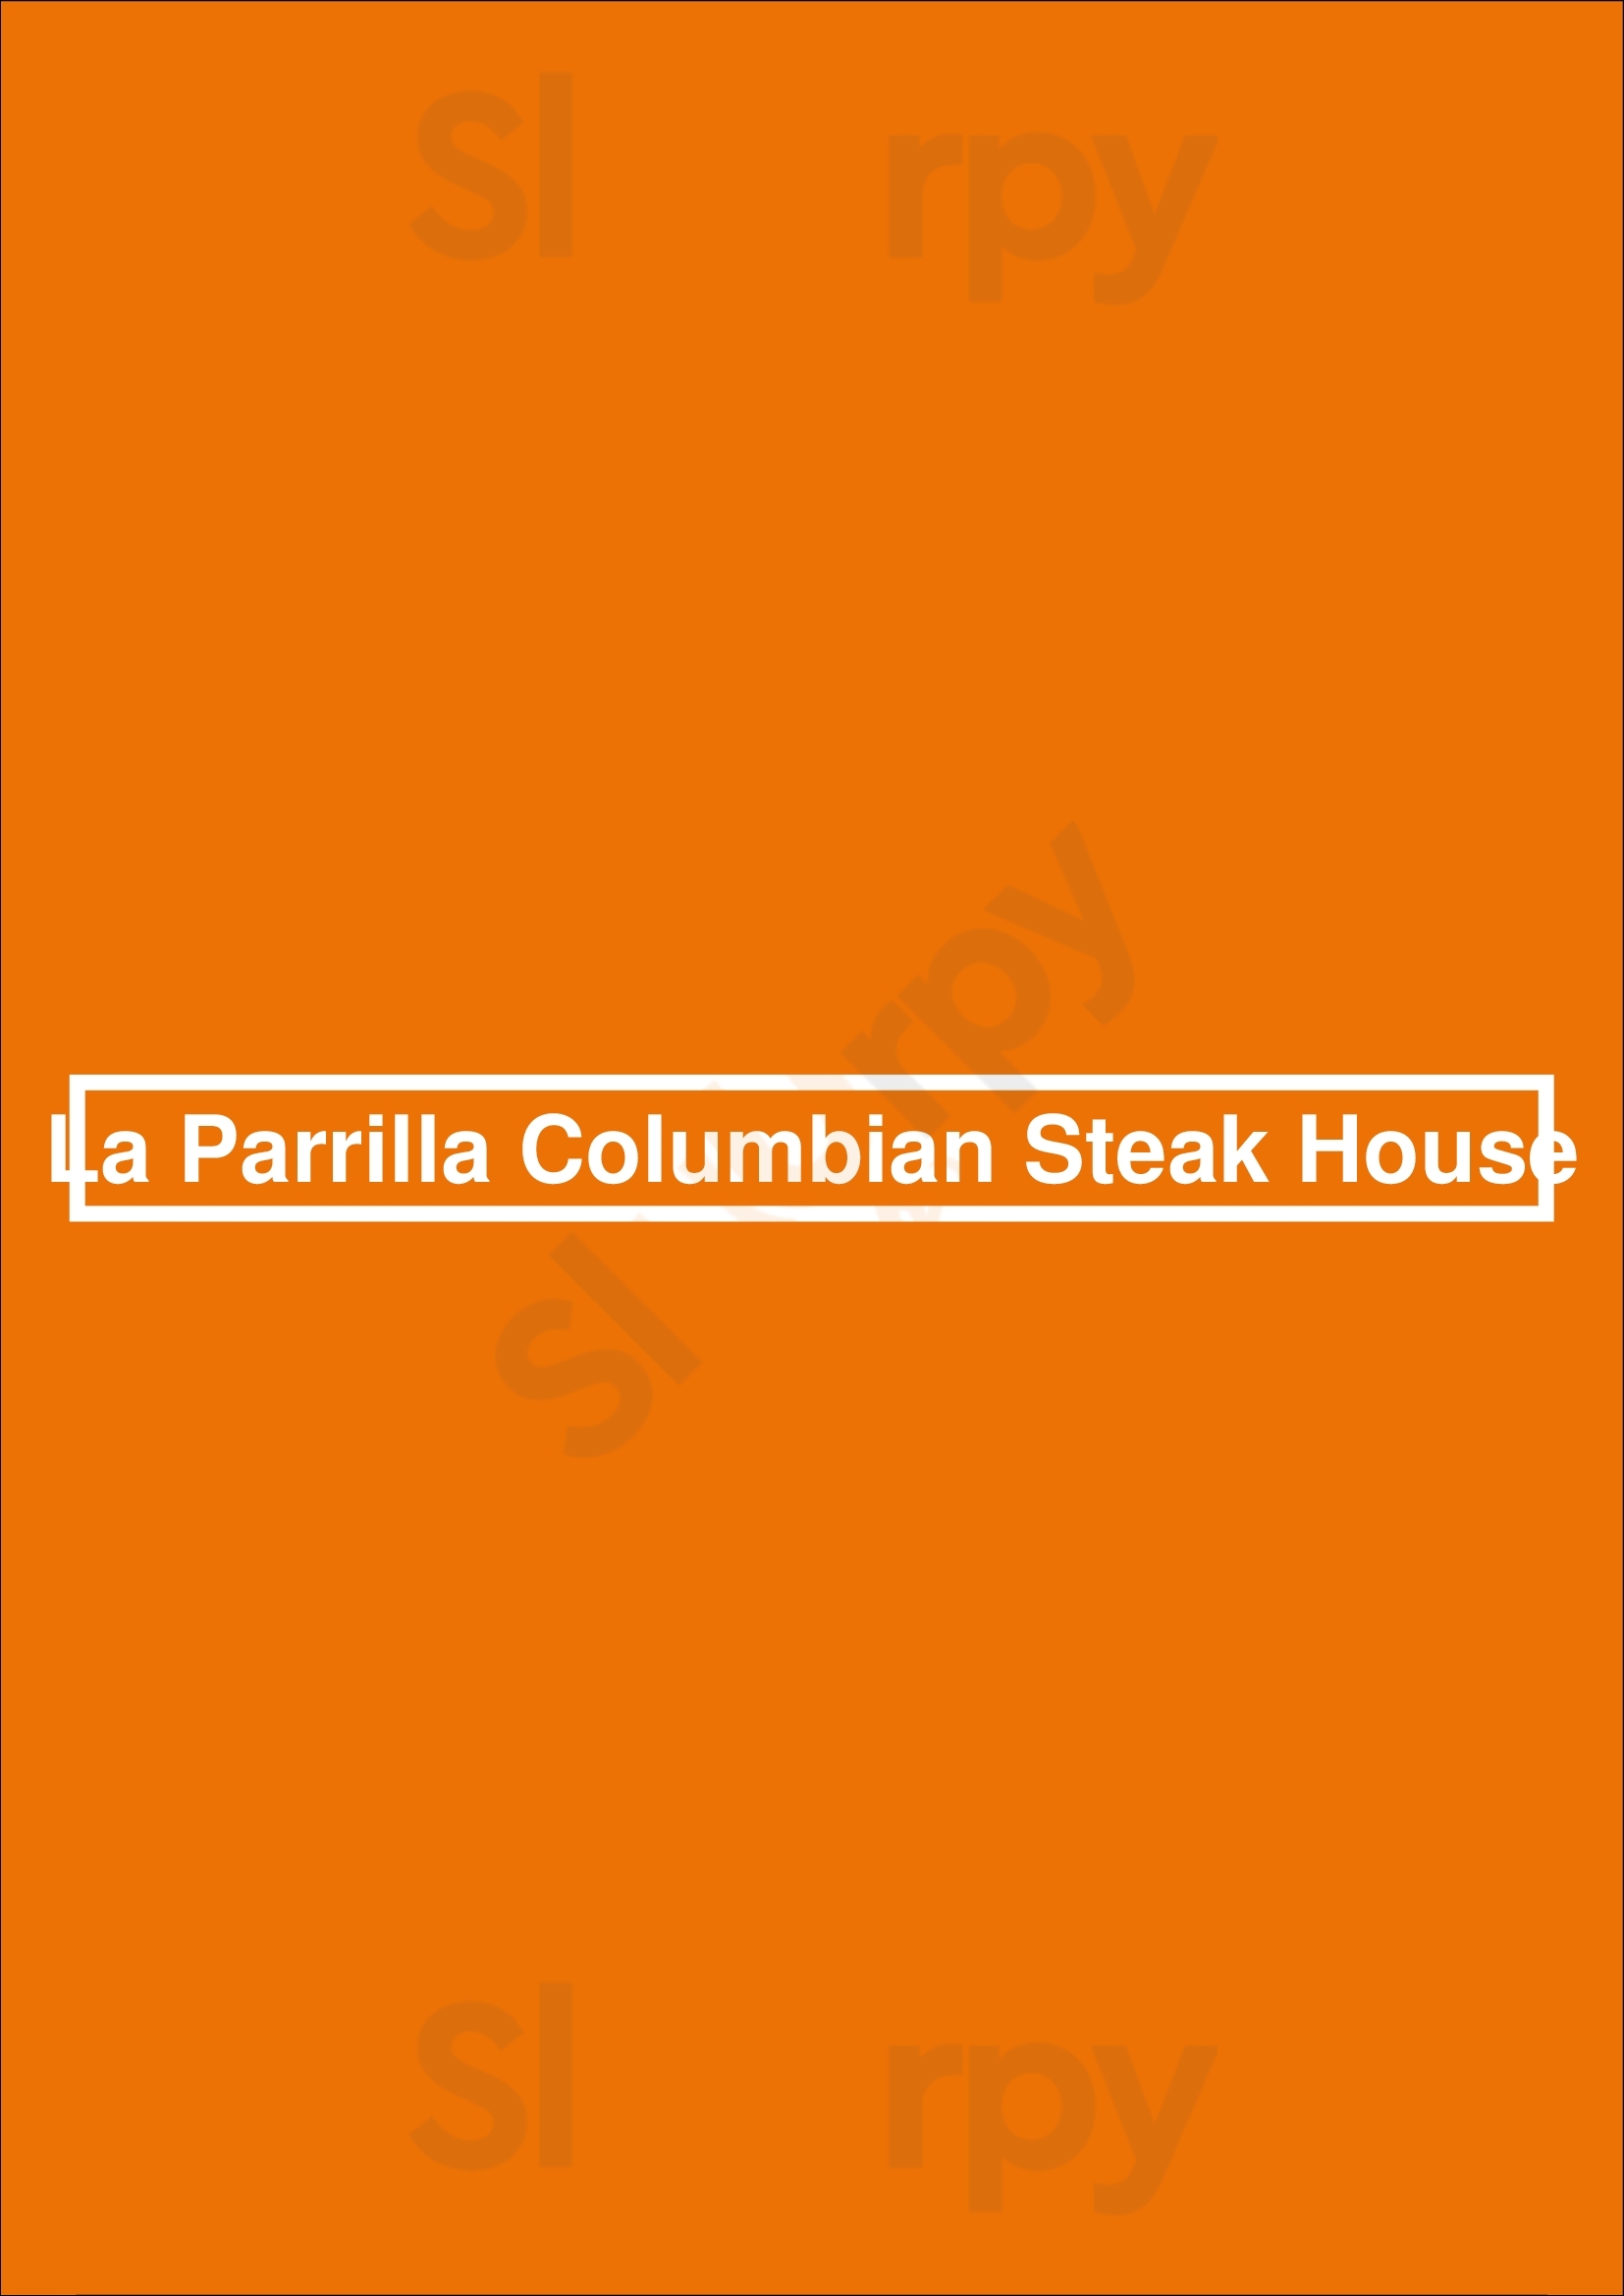 La Parrilla Columbian Steak House Chicago Menu - 1